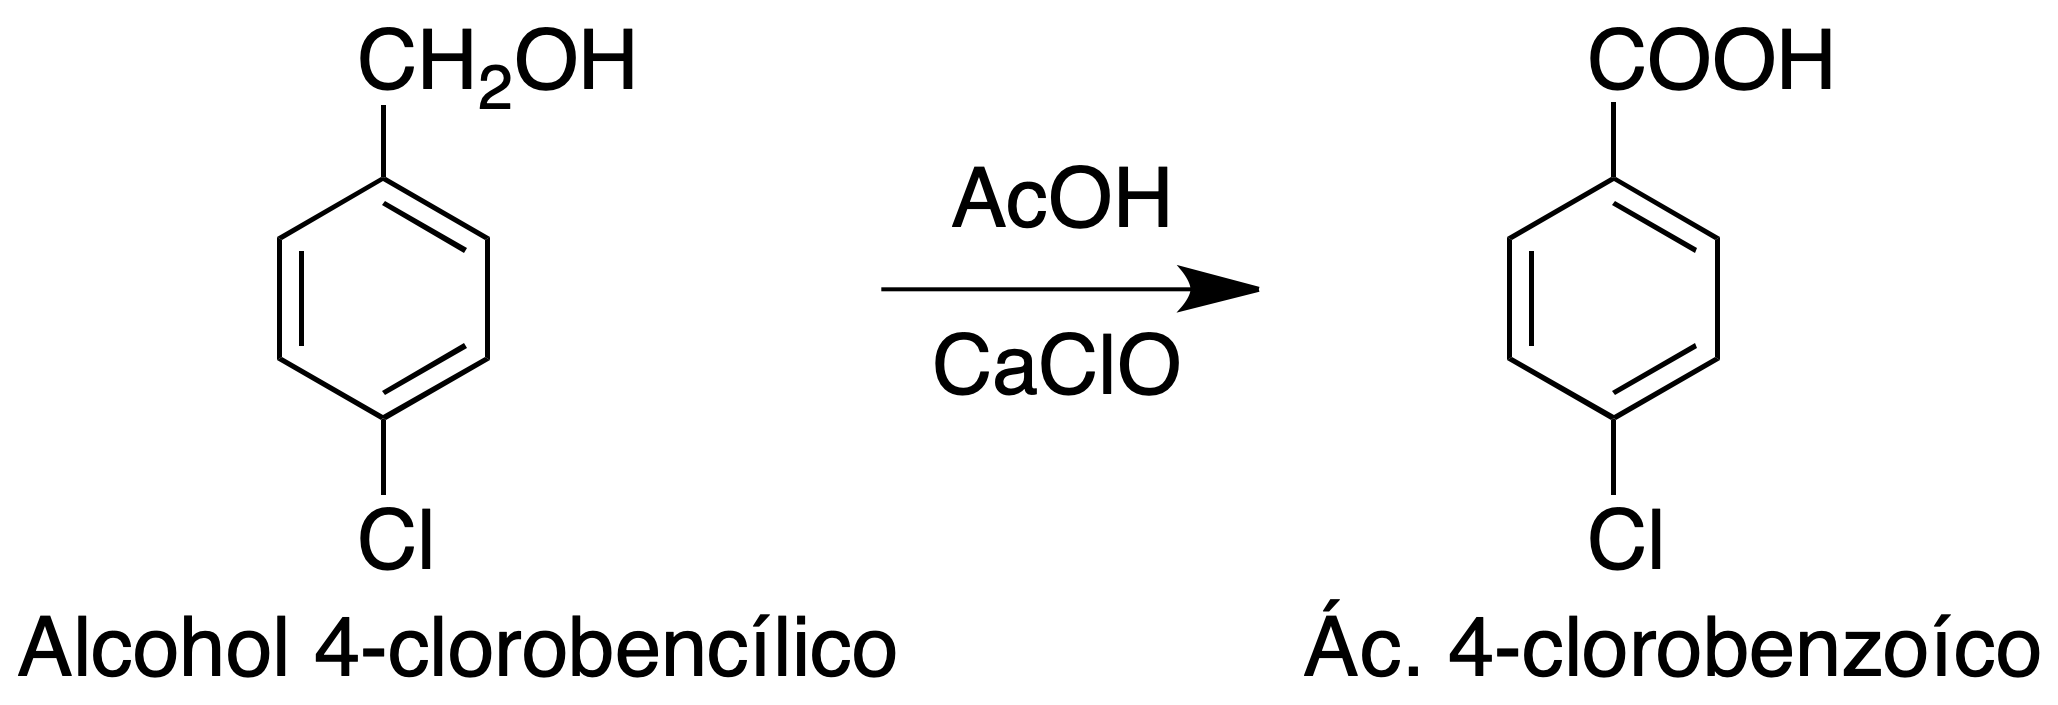 Oxidation of 4-chlorobenzyl alcohol to 4-chlorobenzoic acid - general reaction scheme